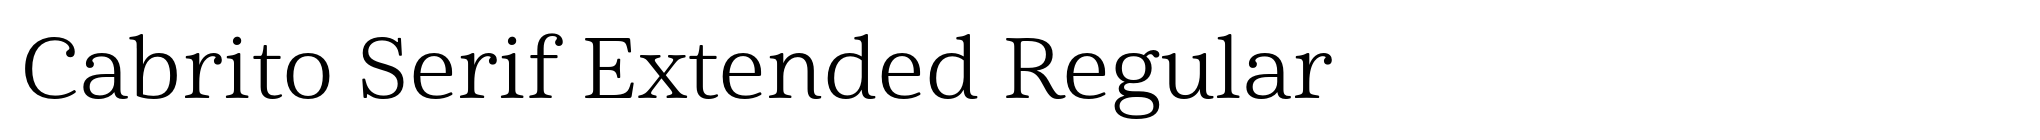 Cabrito Serif Extended Regular image